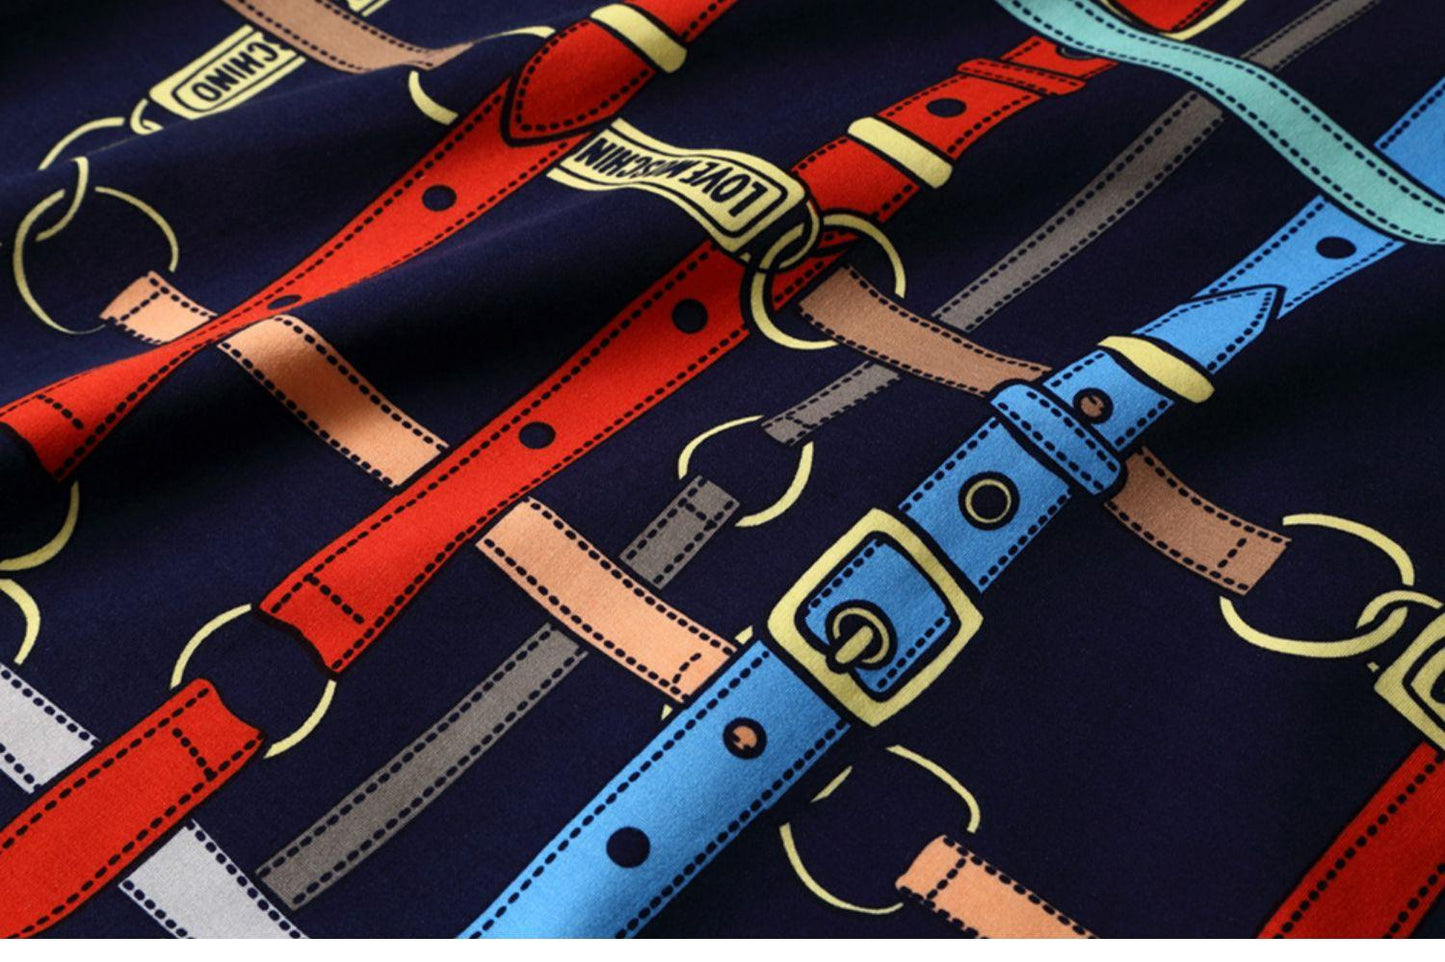 Belt print high neck multi colored full swing dress vintage retro inspired audreys dress - Adahl